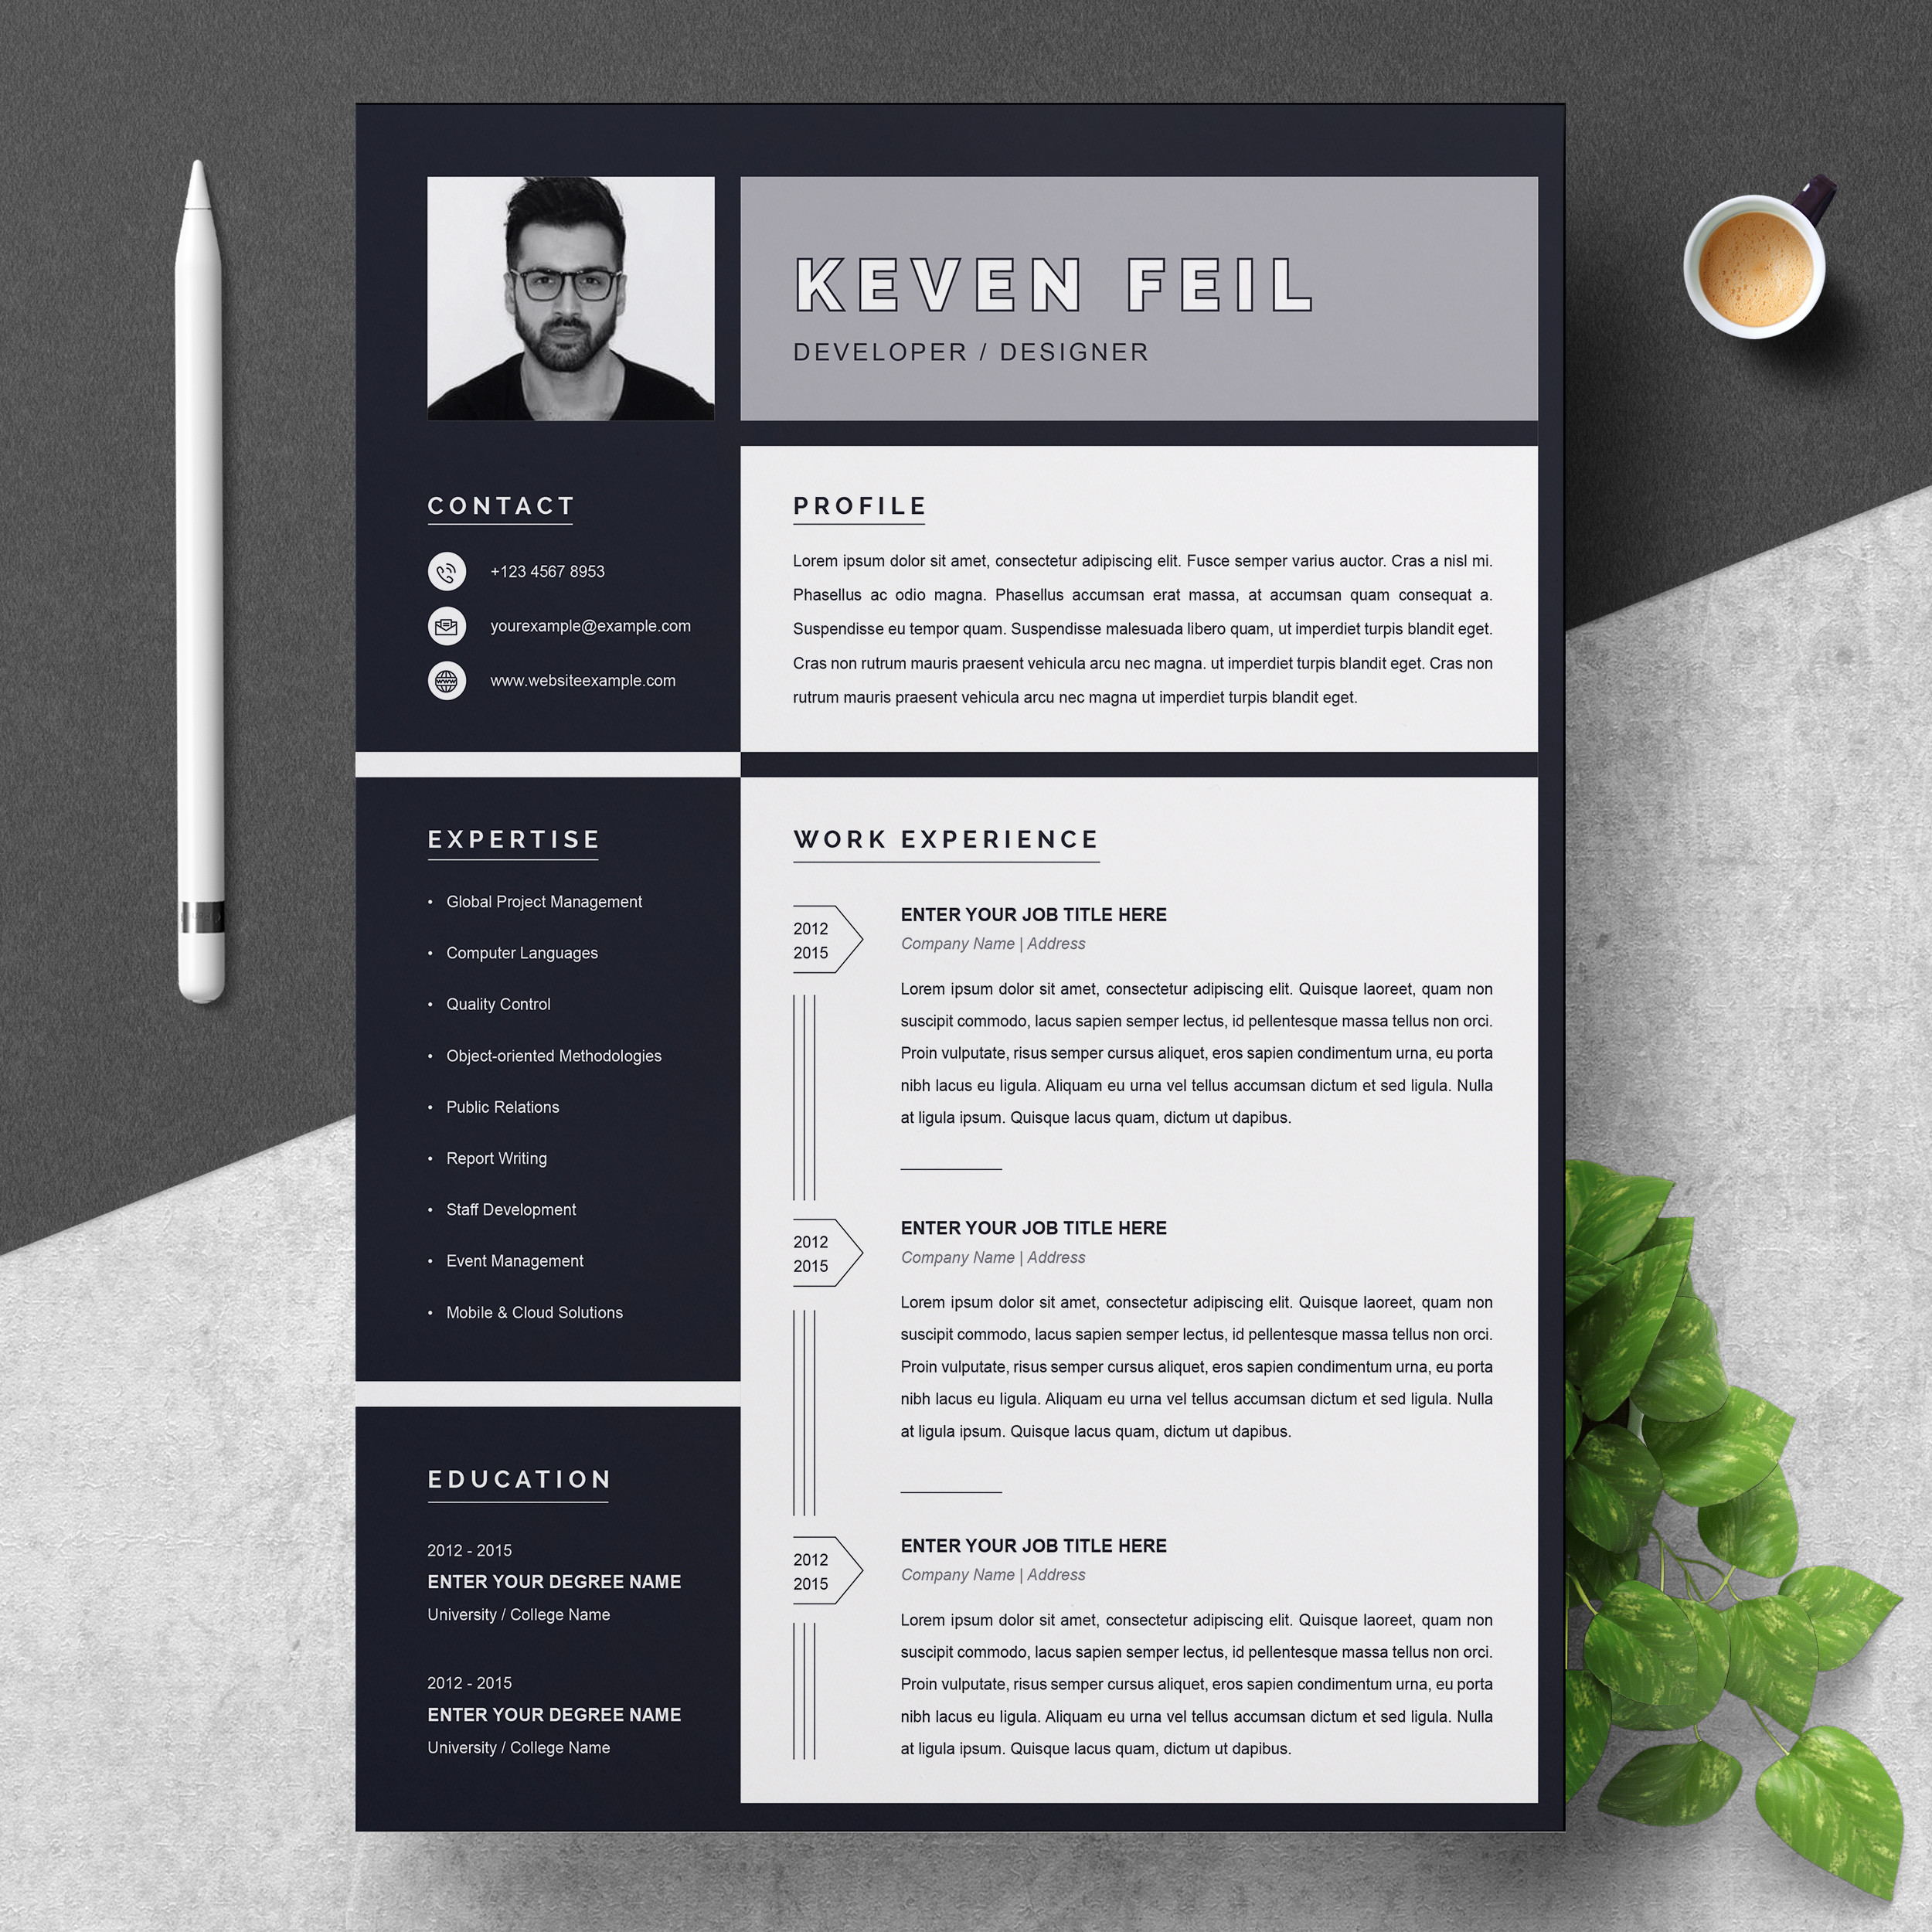 Creative Resume Design Templates Free Download Resume / Cv Template Black & White â Free Resumes, Templates …